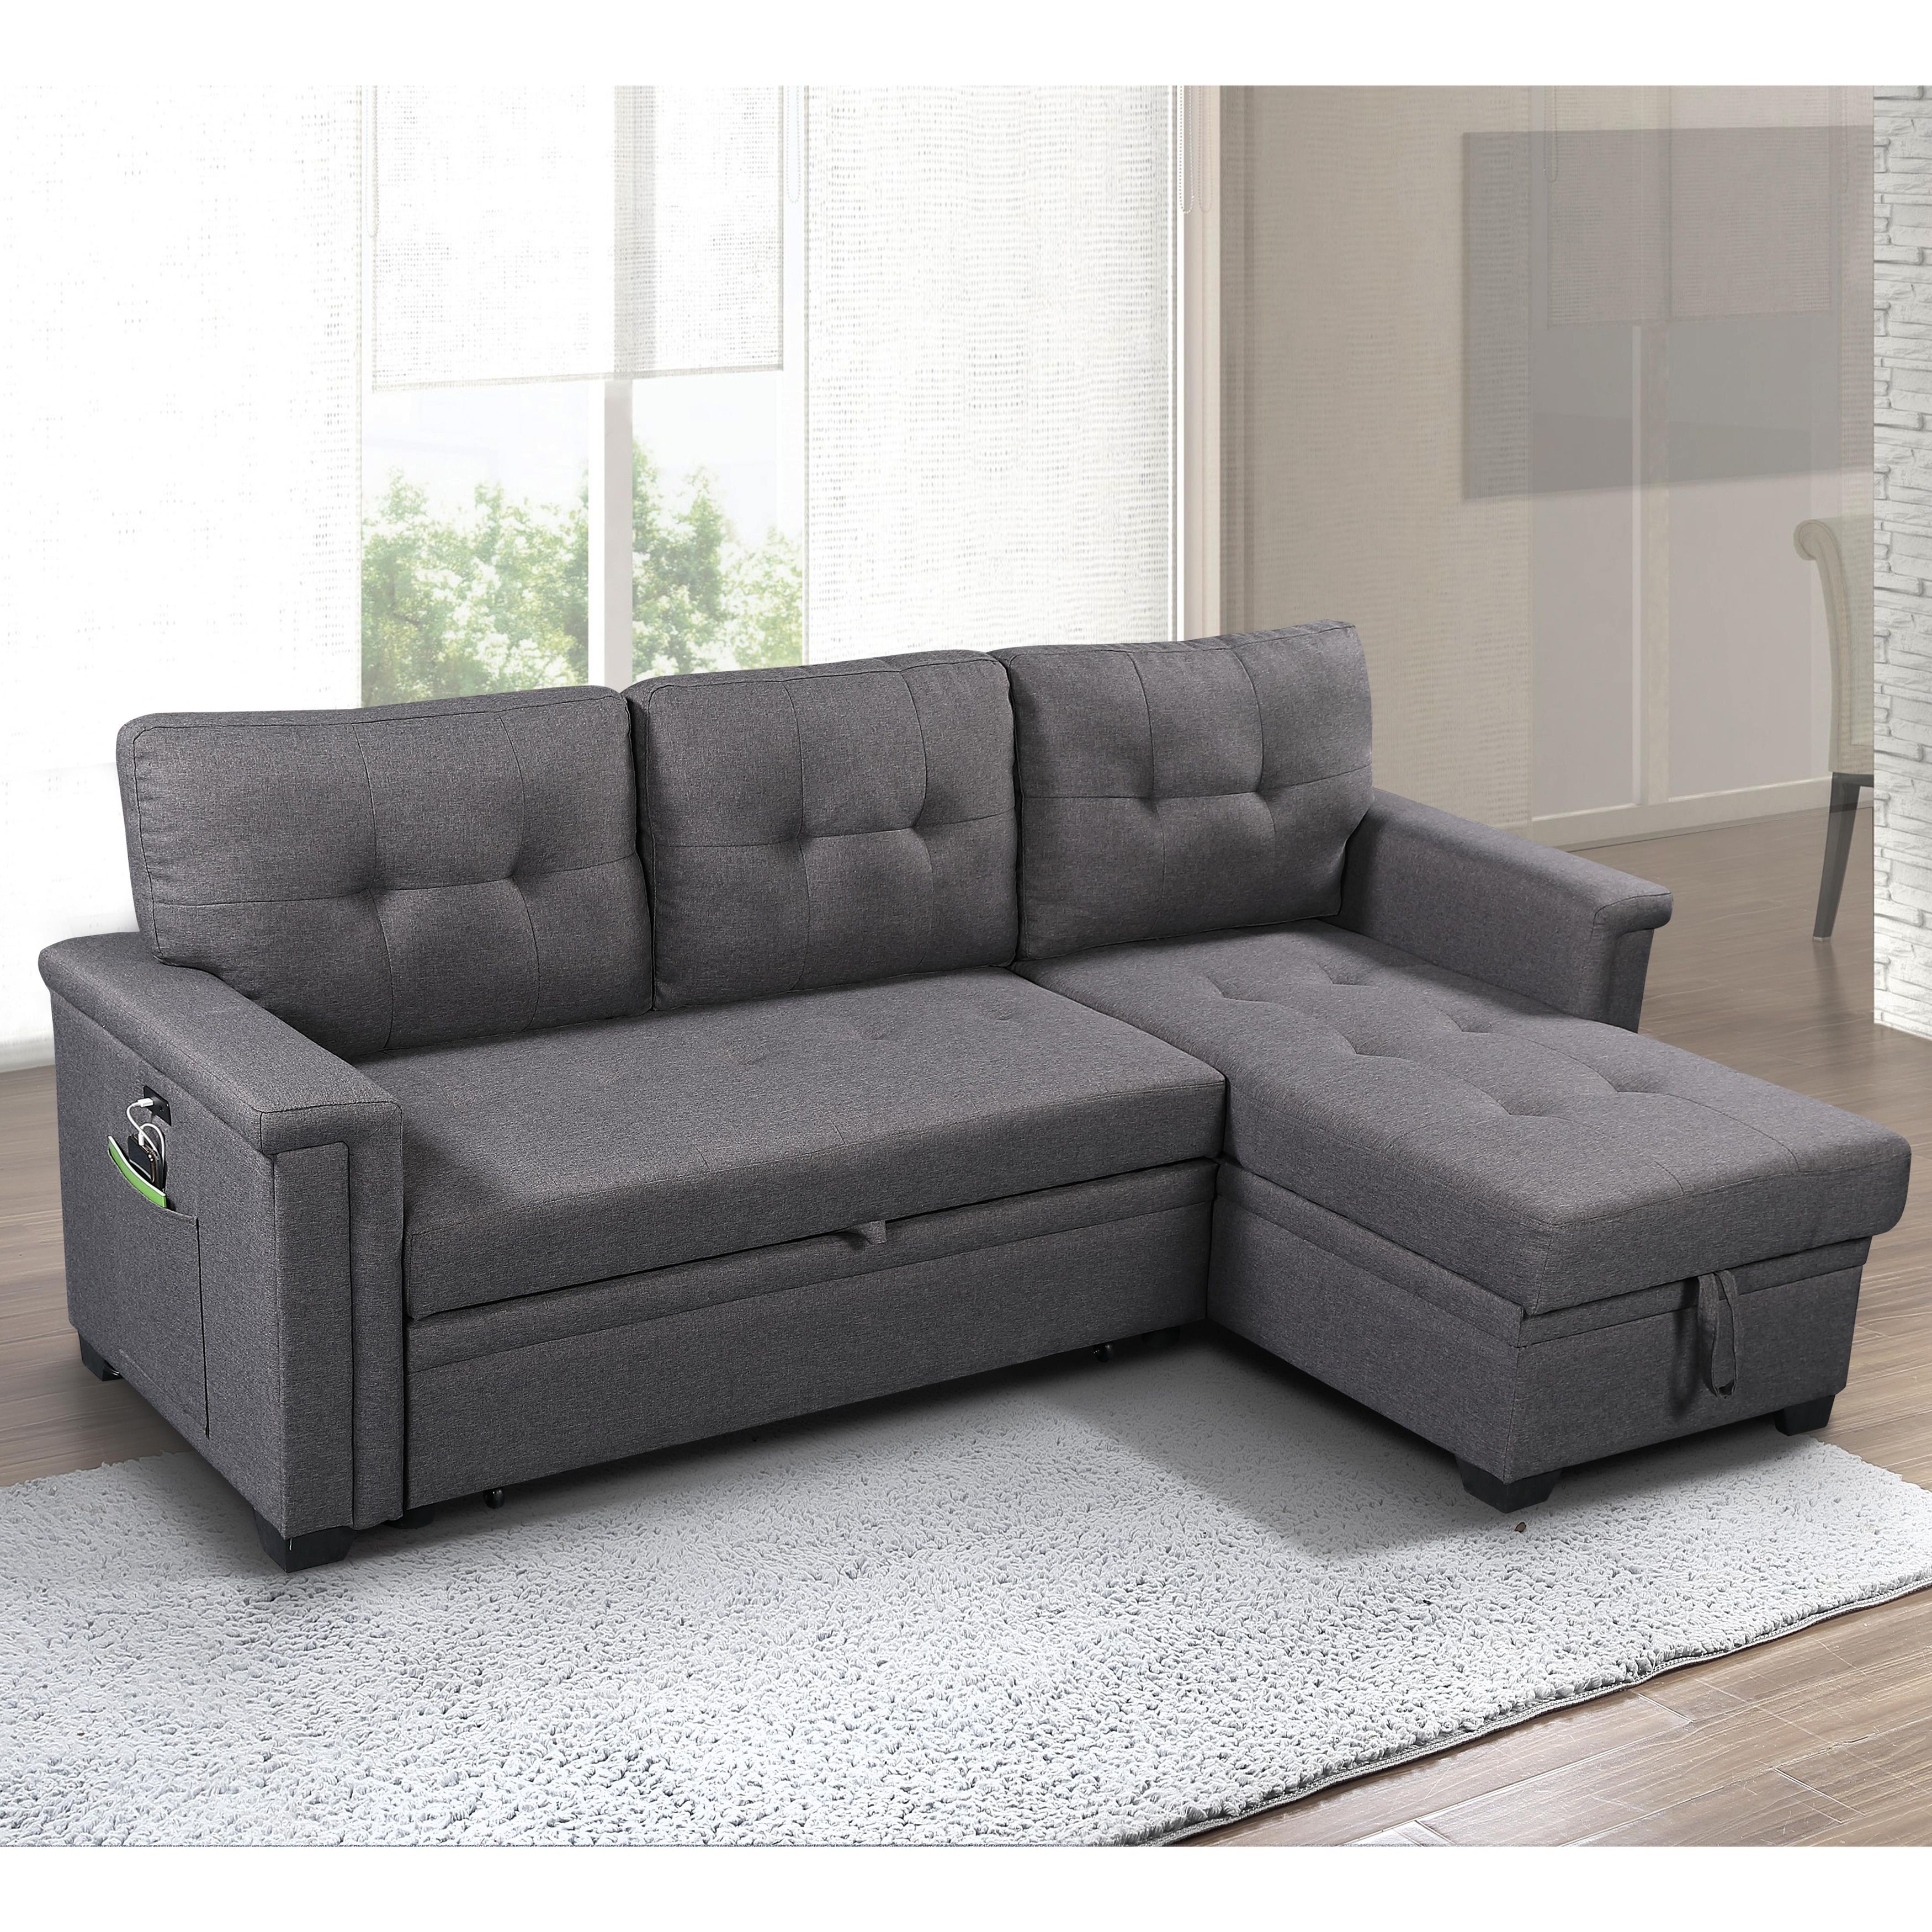 Ashlyn Reversible Sleeper Sofa With Storage Chaise – – 30144937 With Sleeper Sofas With Storage (View 2 of 20)